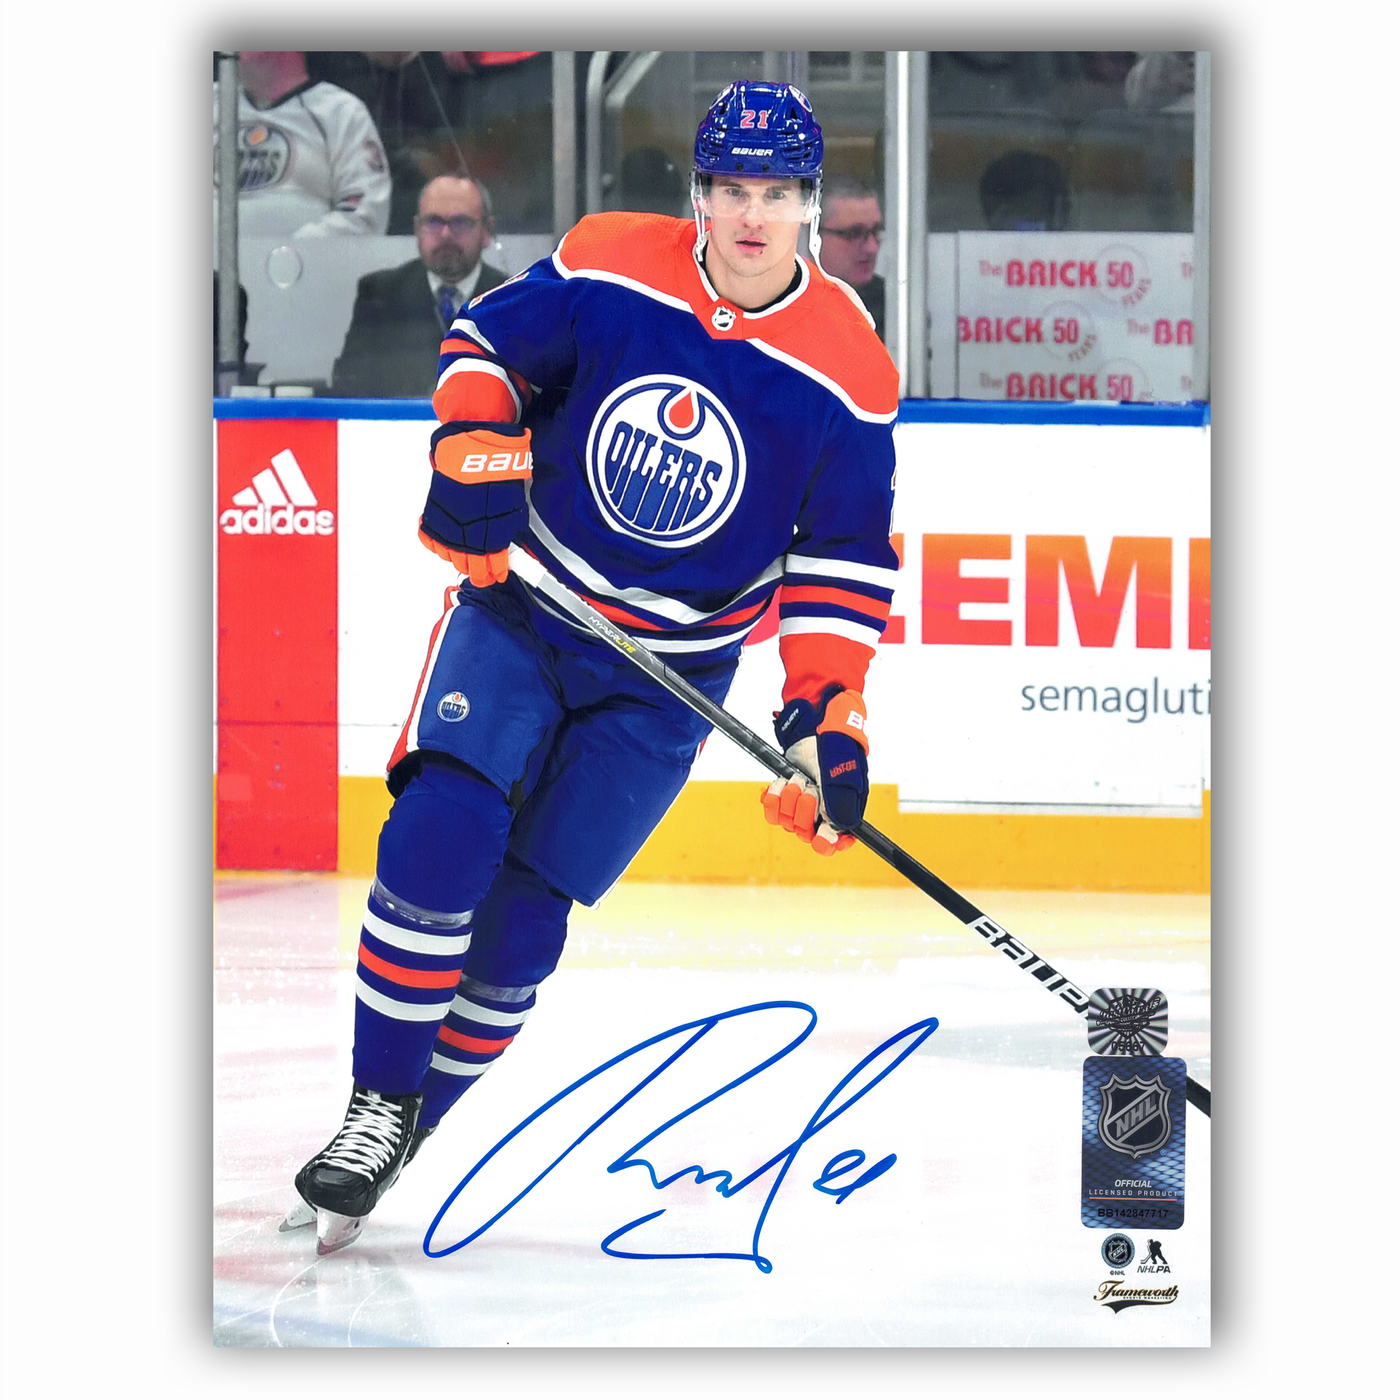 Klim Kostin Edmonton Oilers Autographed Home 8x10 Photo